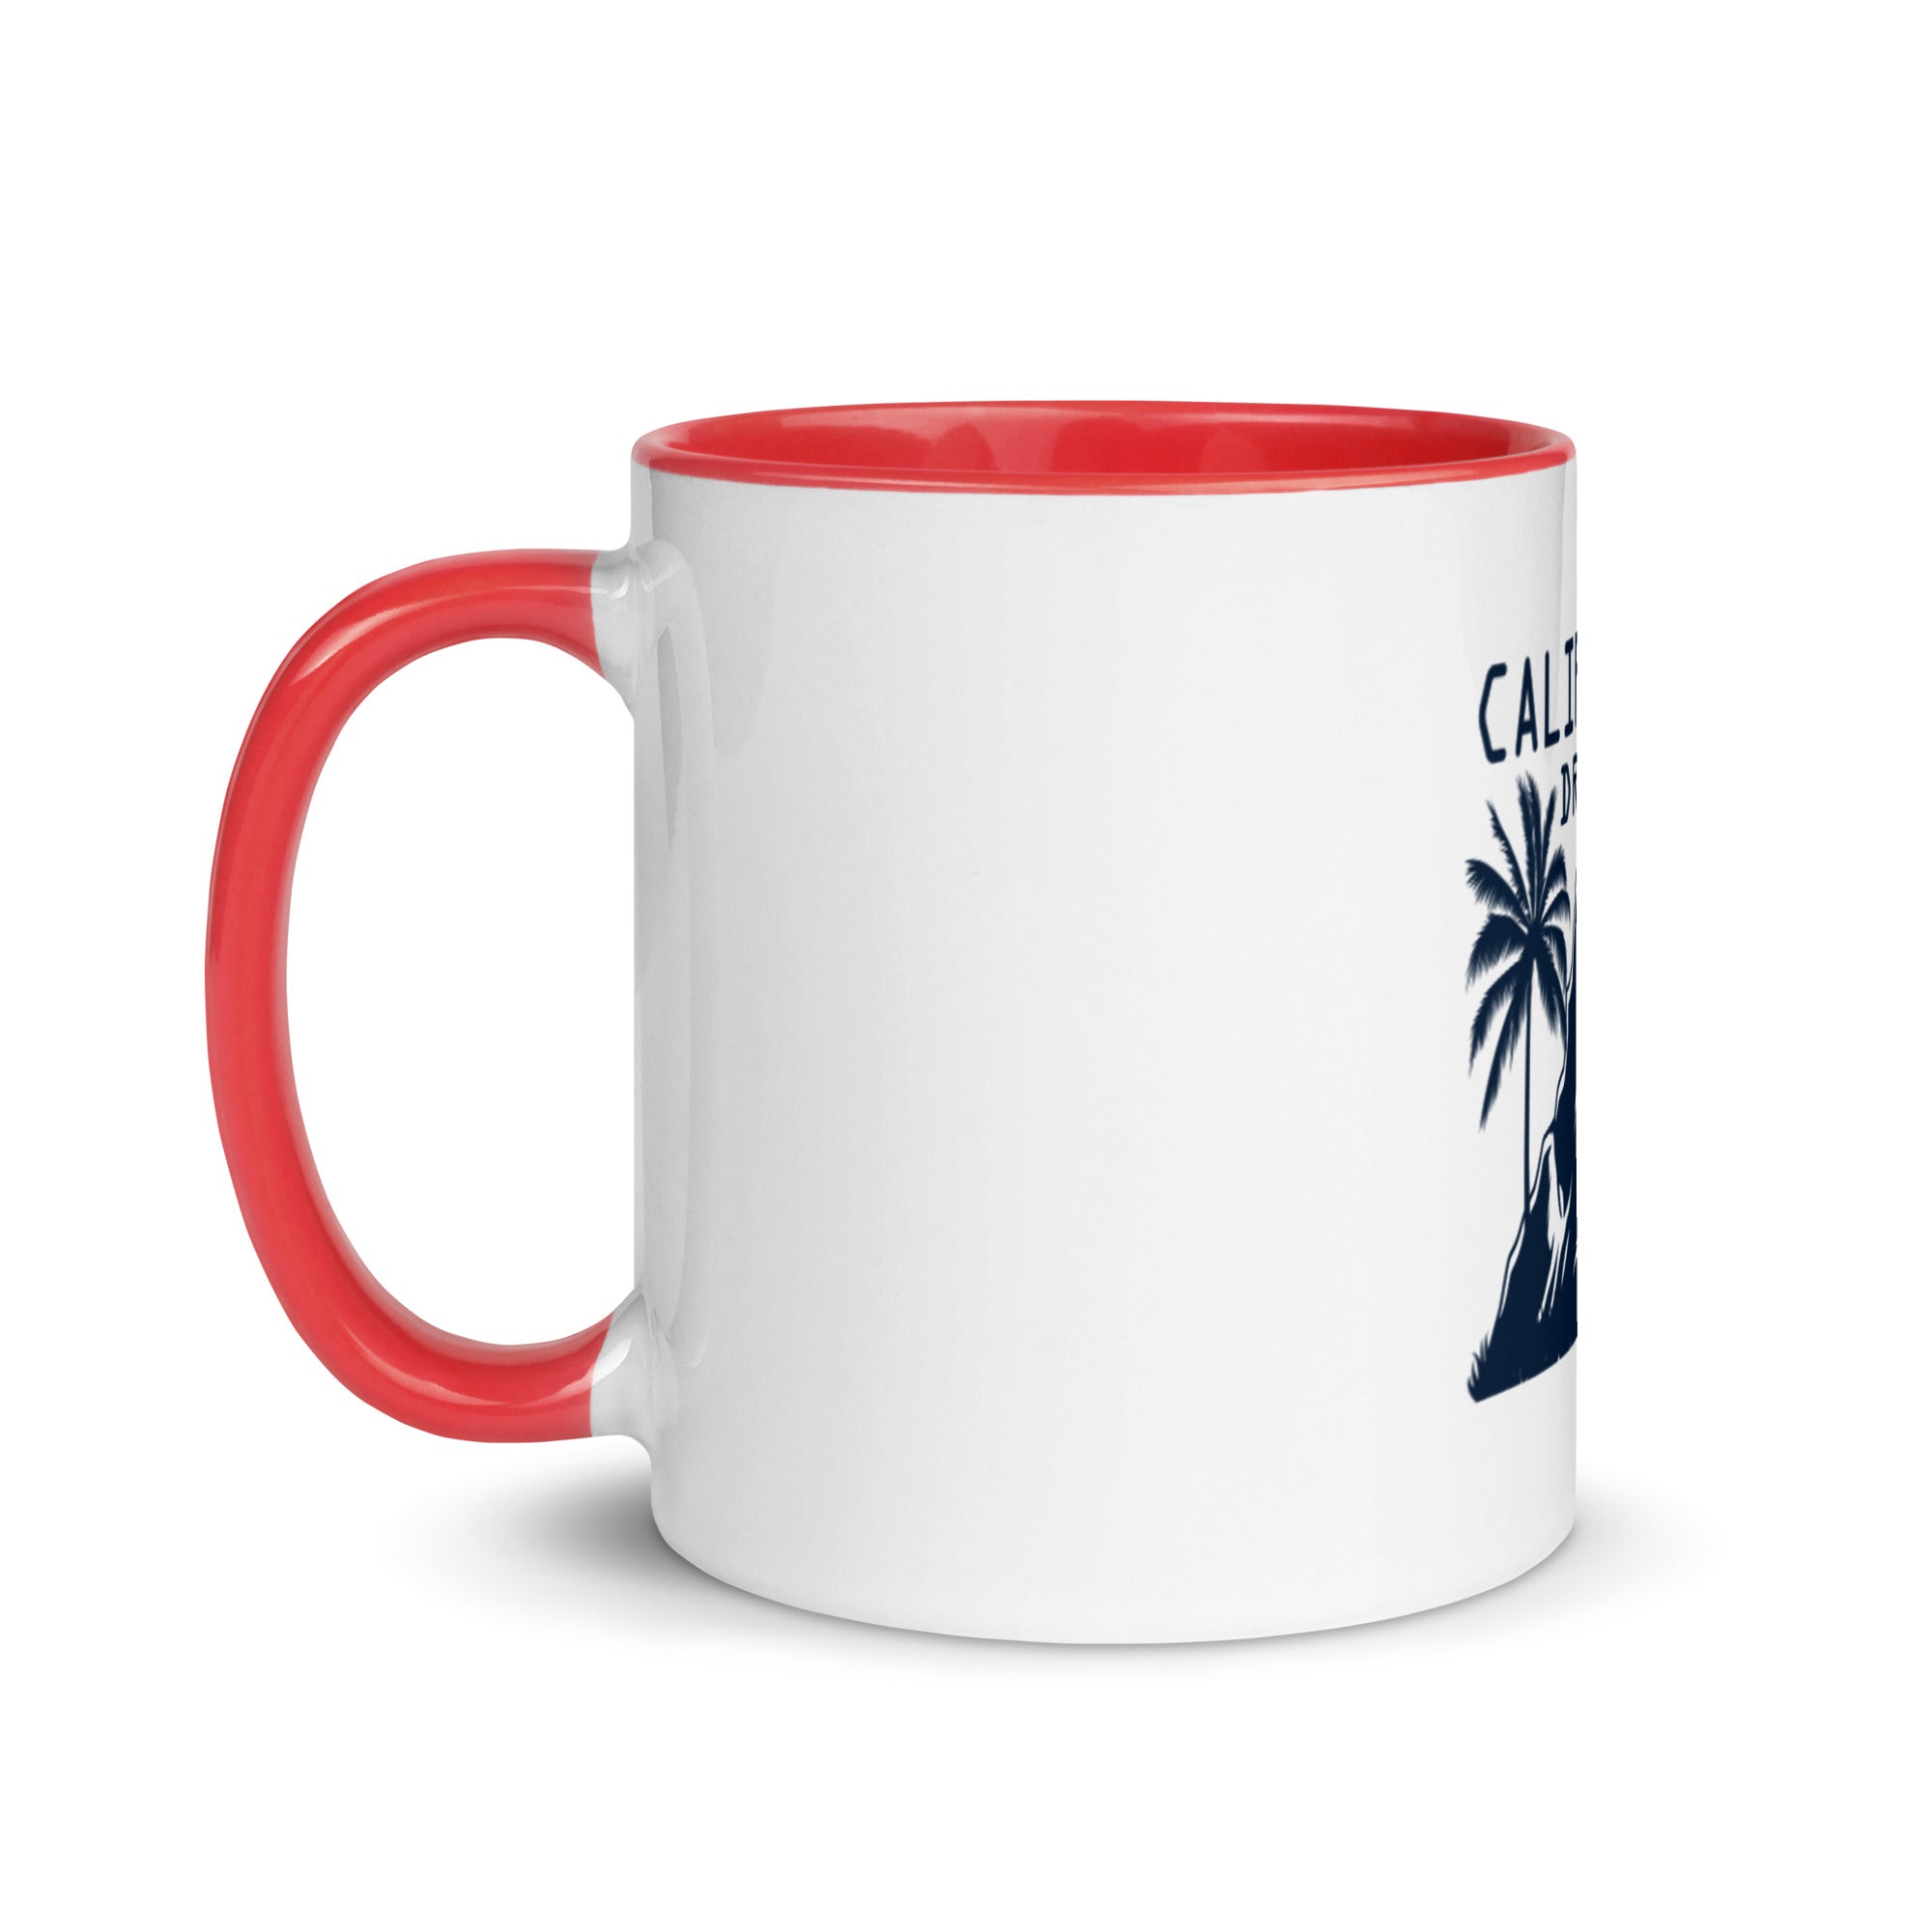 California Dreaming - Mug with Color Inside